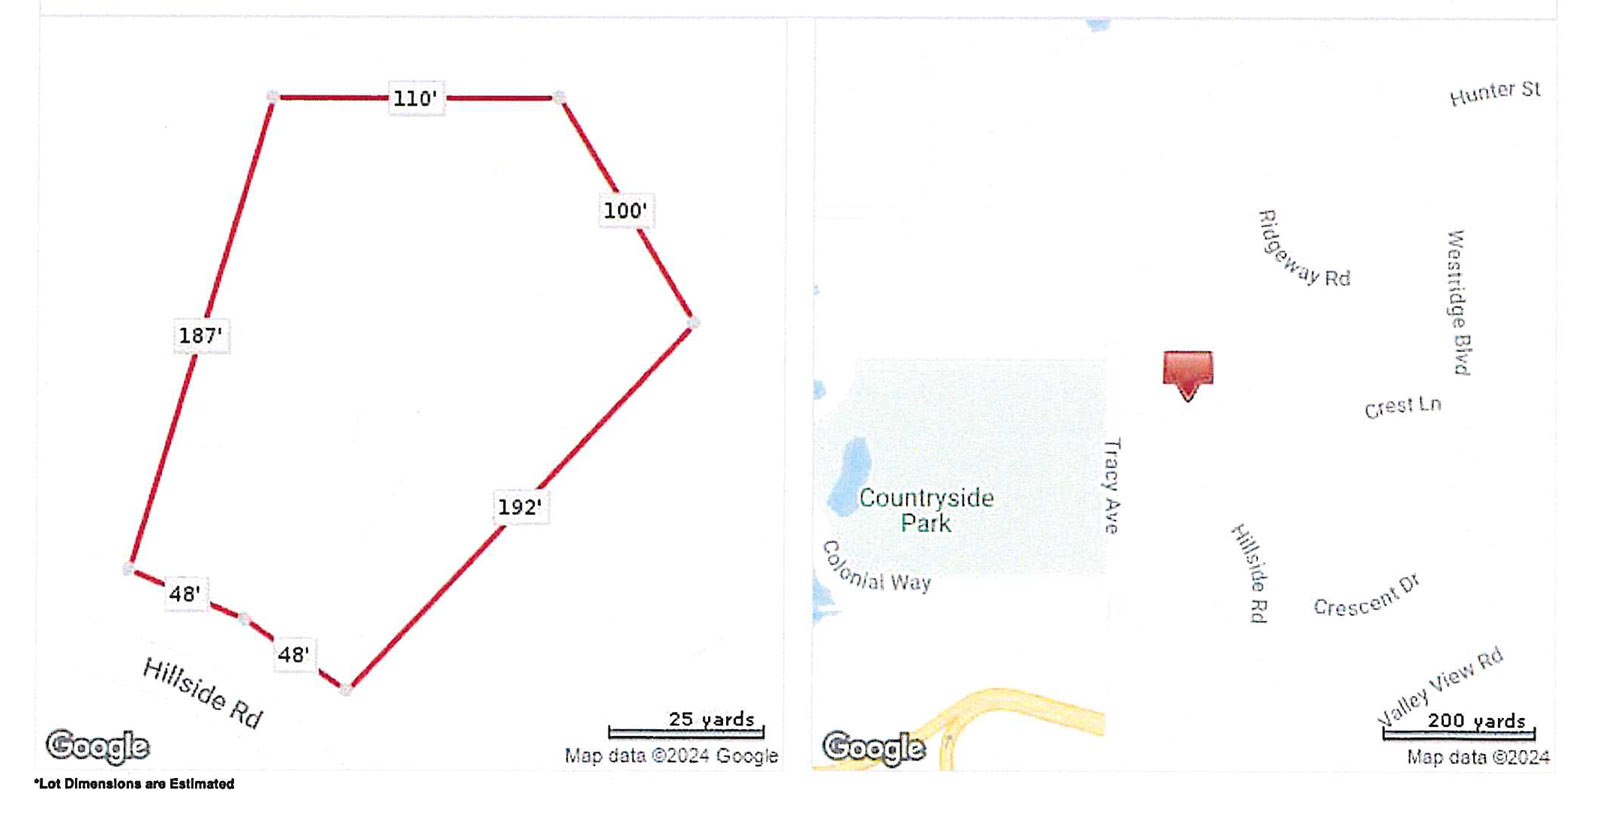 6205 Hillside Rd, Edina, MN 55436 Estimate Lot Dimension and Map